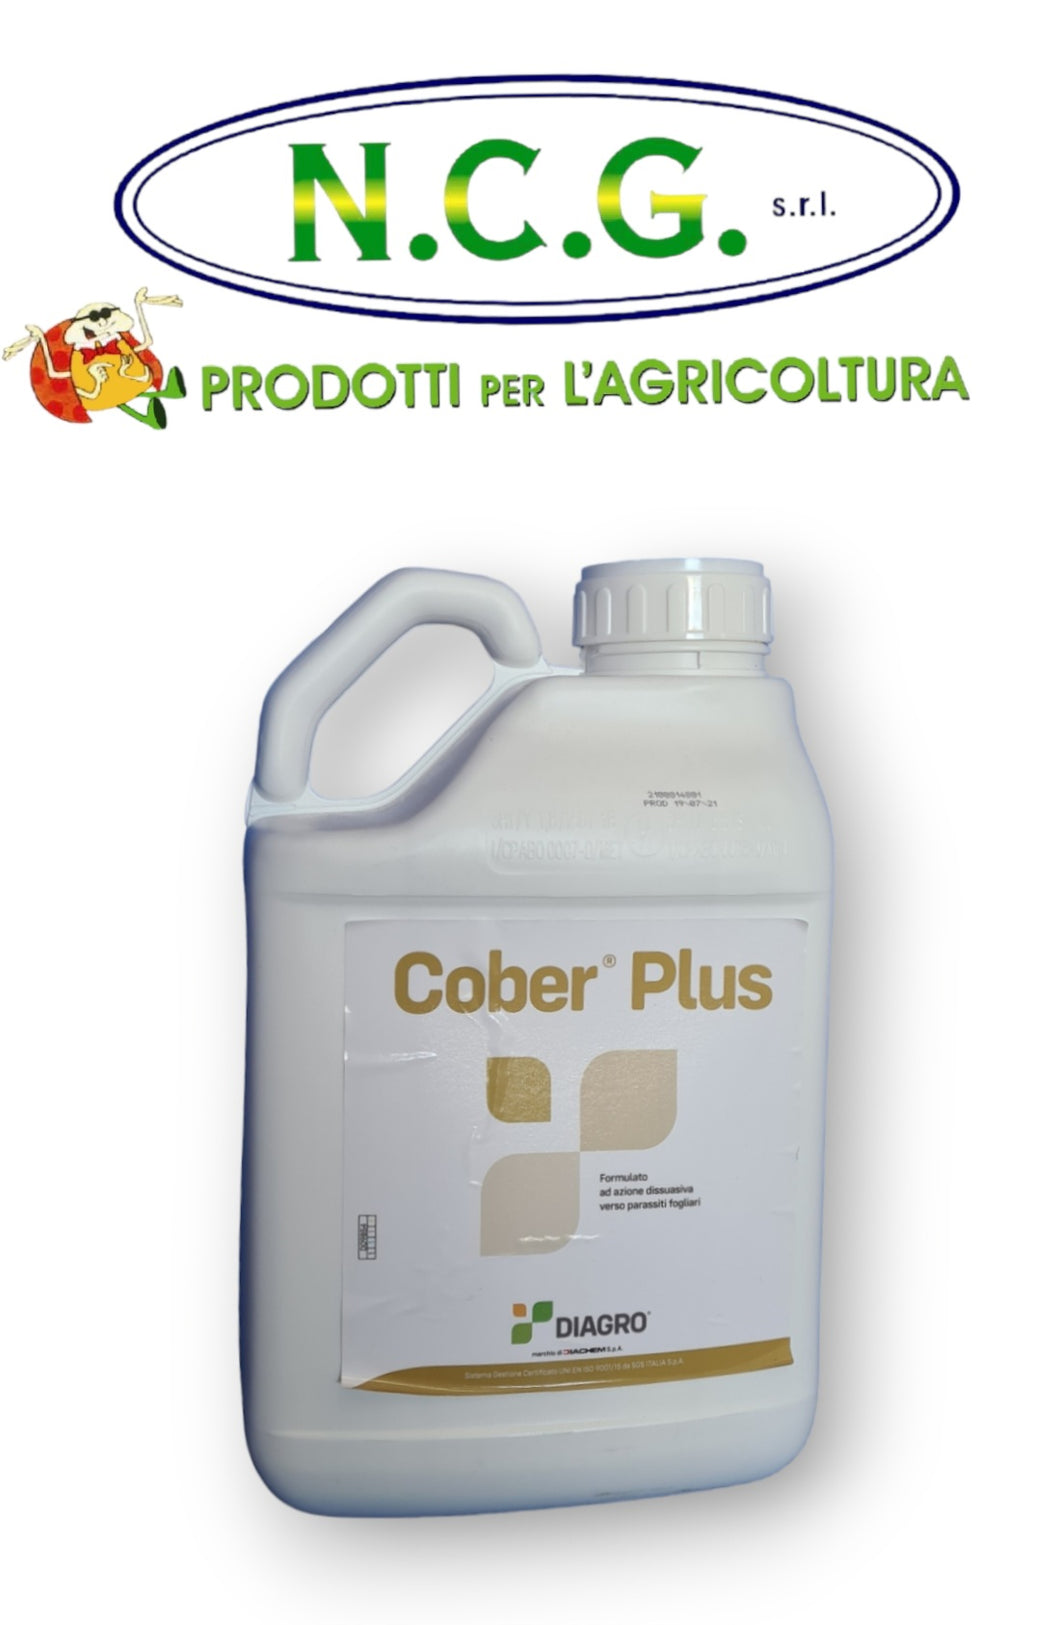 Cober Plus da lt 5 Diagro insetticida aficida naturale